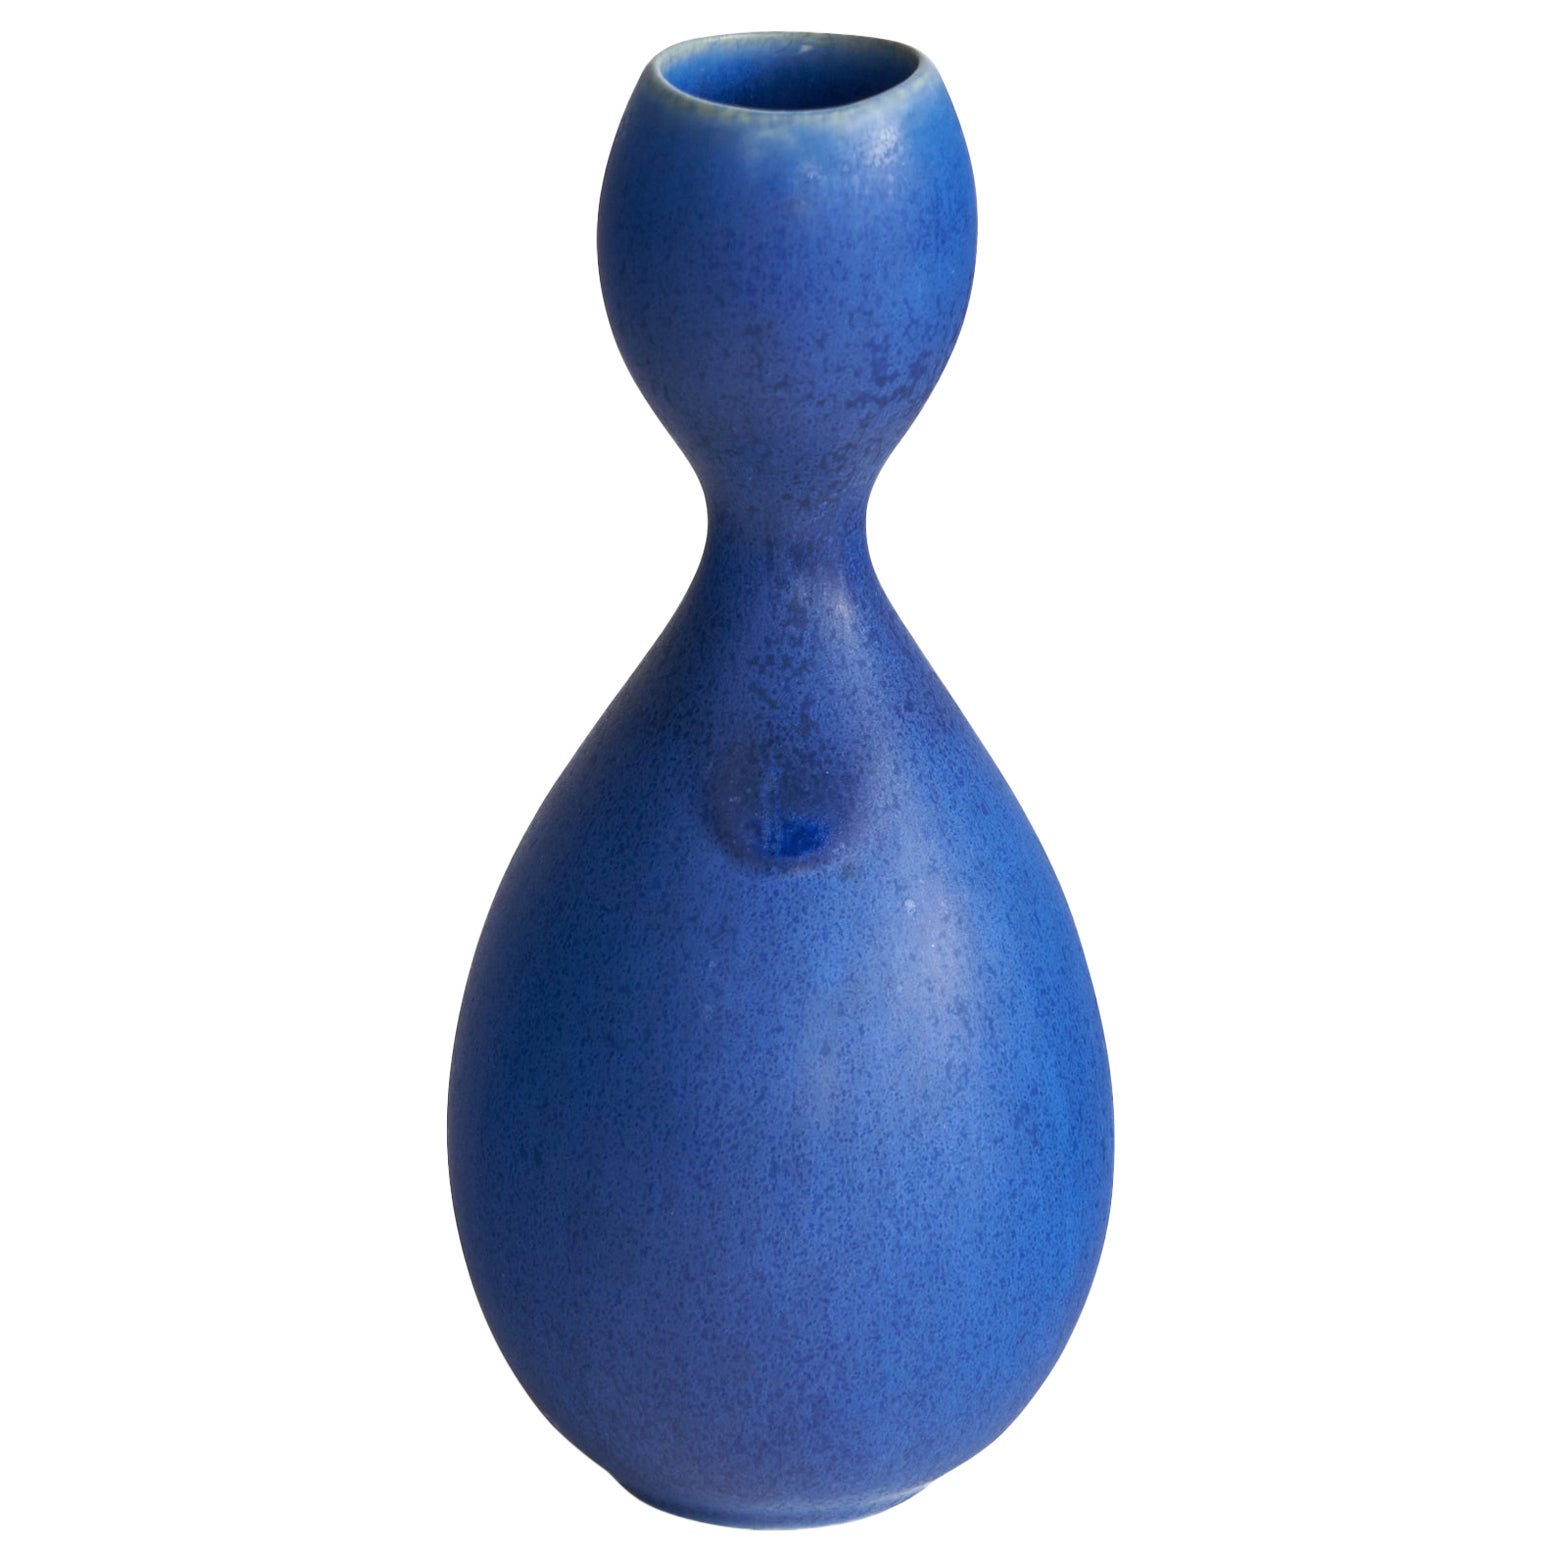 Stig Lindberg, Small Organic Vase, Ceramic, Sweden, 1950s